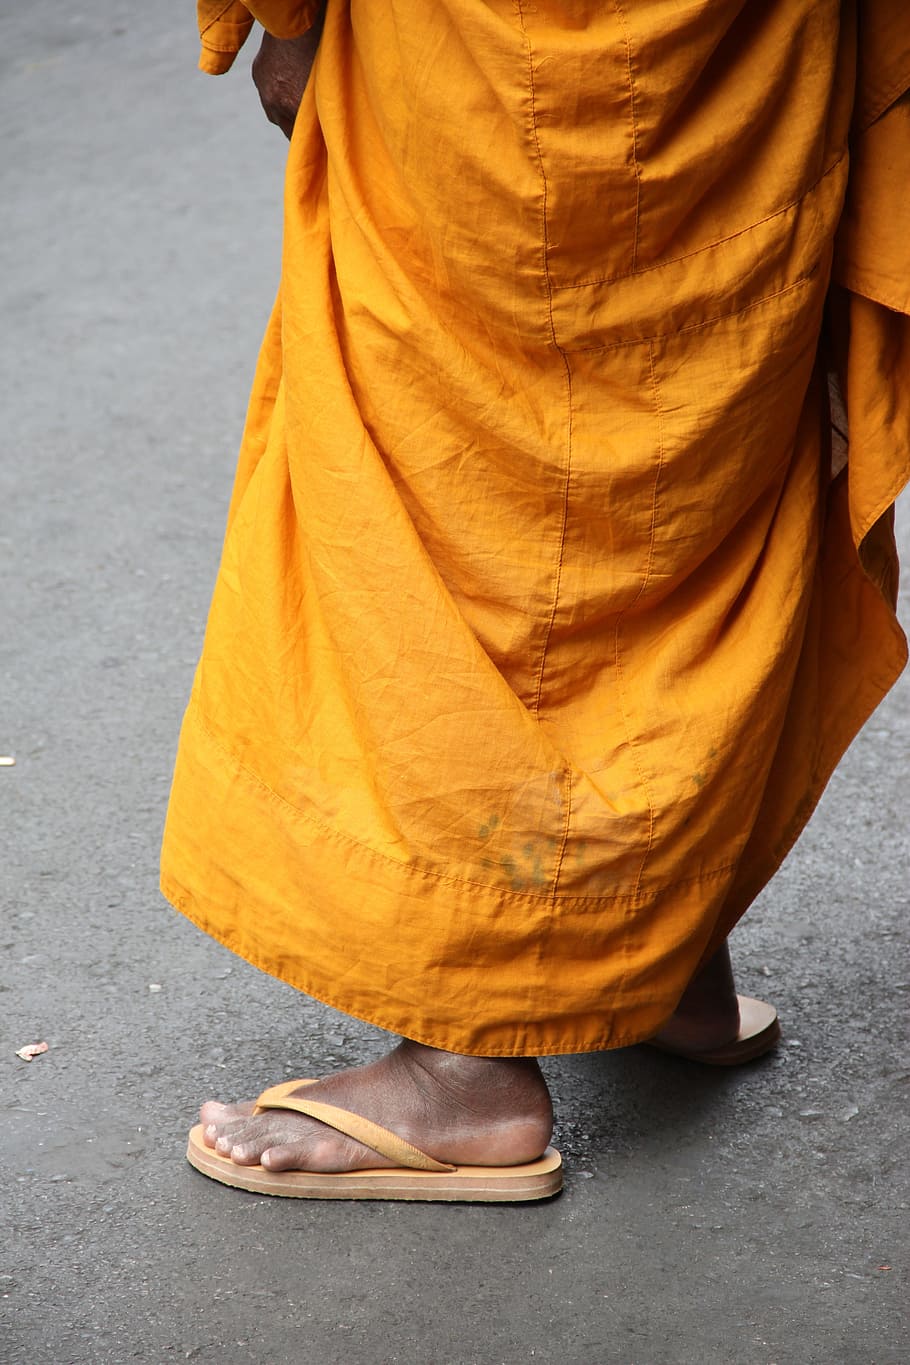 Bangkok, Thailand, Chinatown, Monk, buddhism, feet, low section, street, human foot, human leg